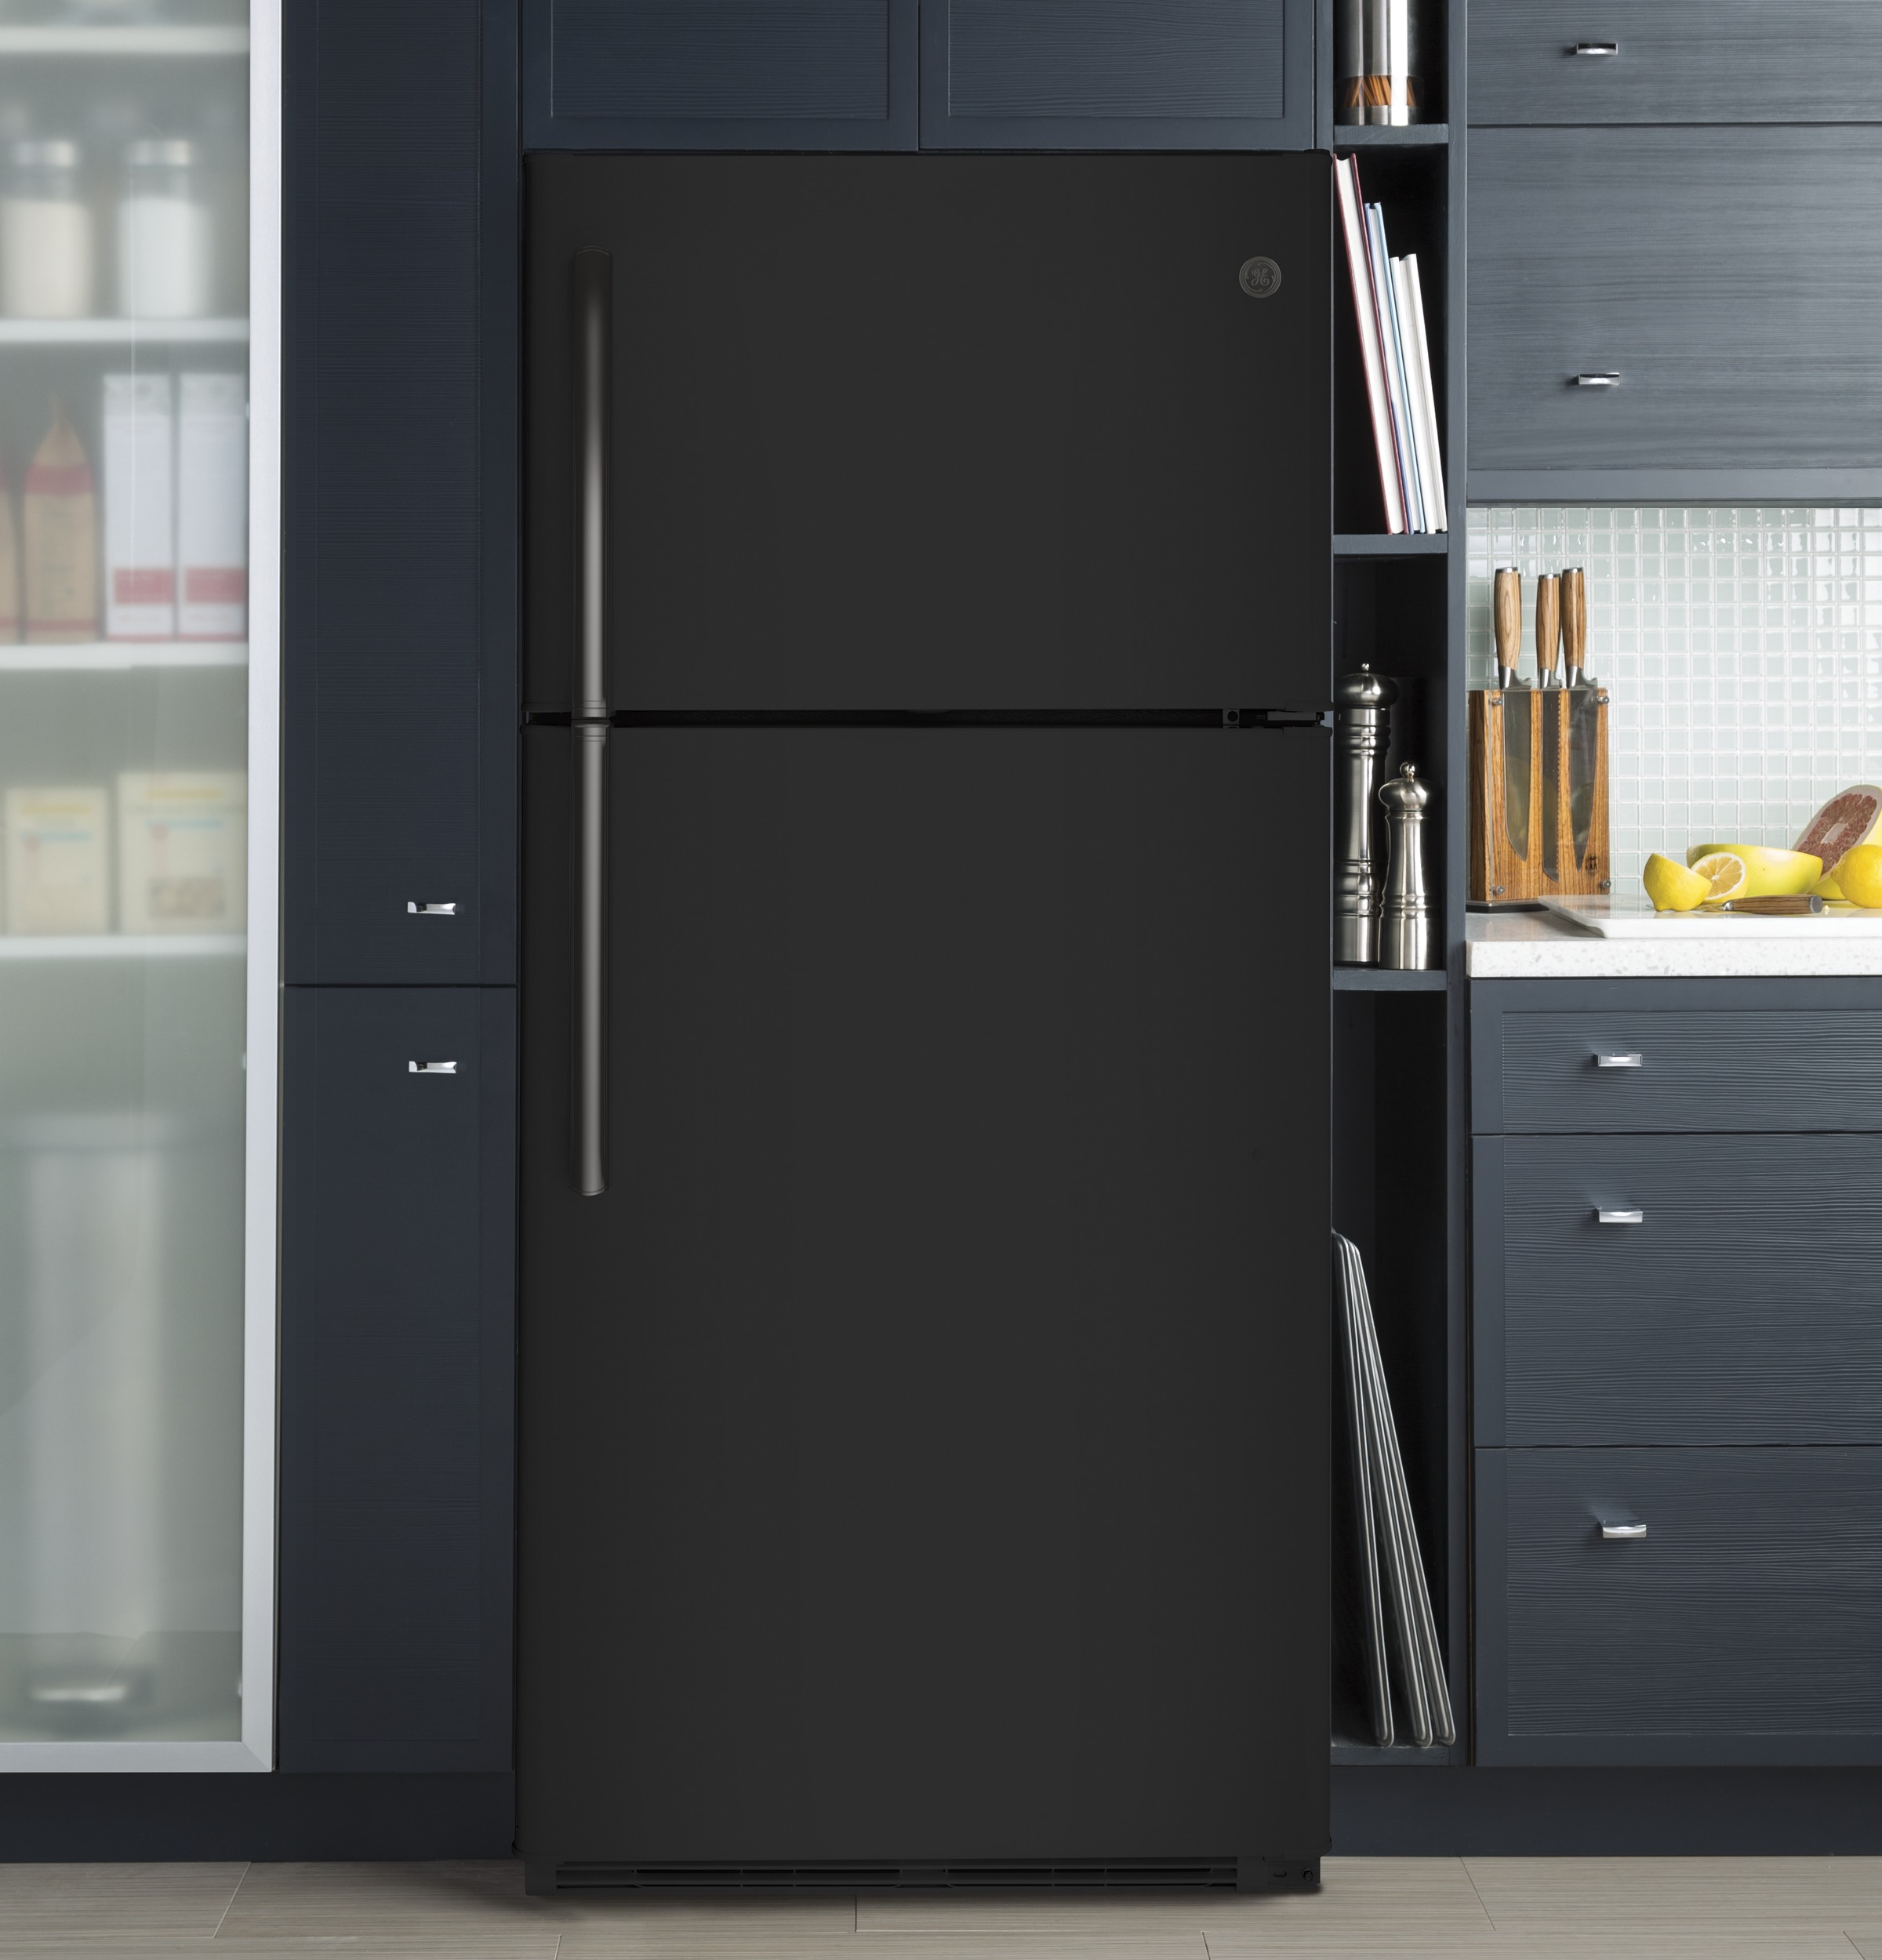 product image of black ge top freezer refrigerator